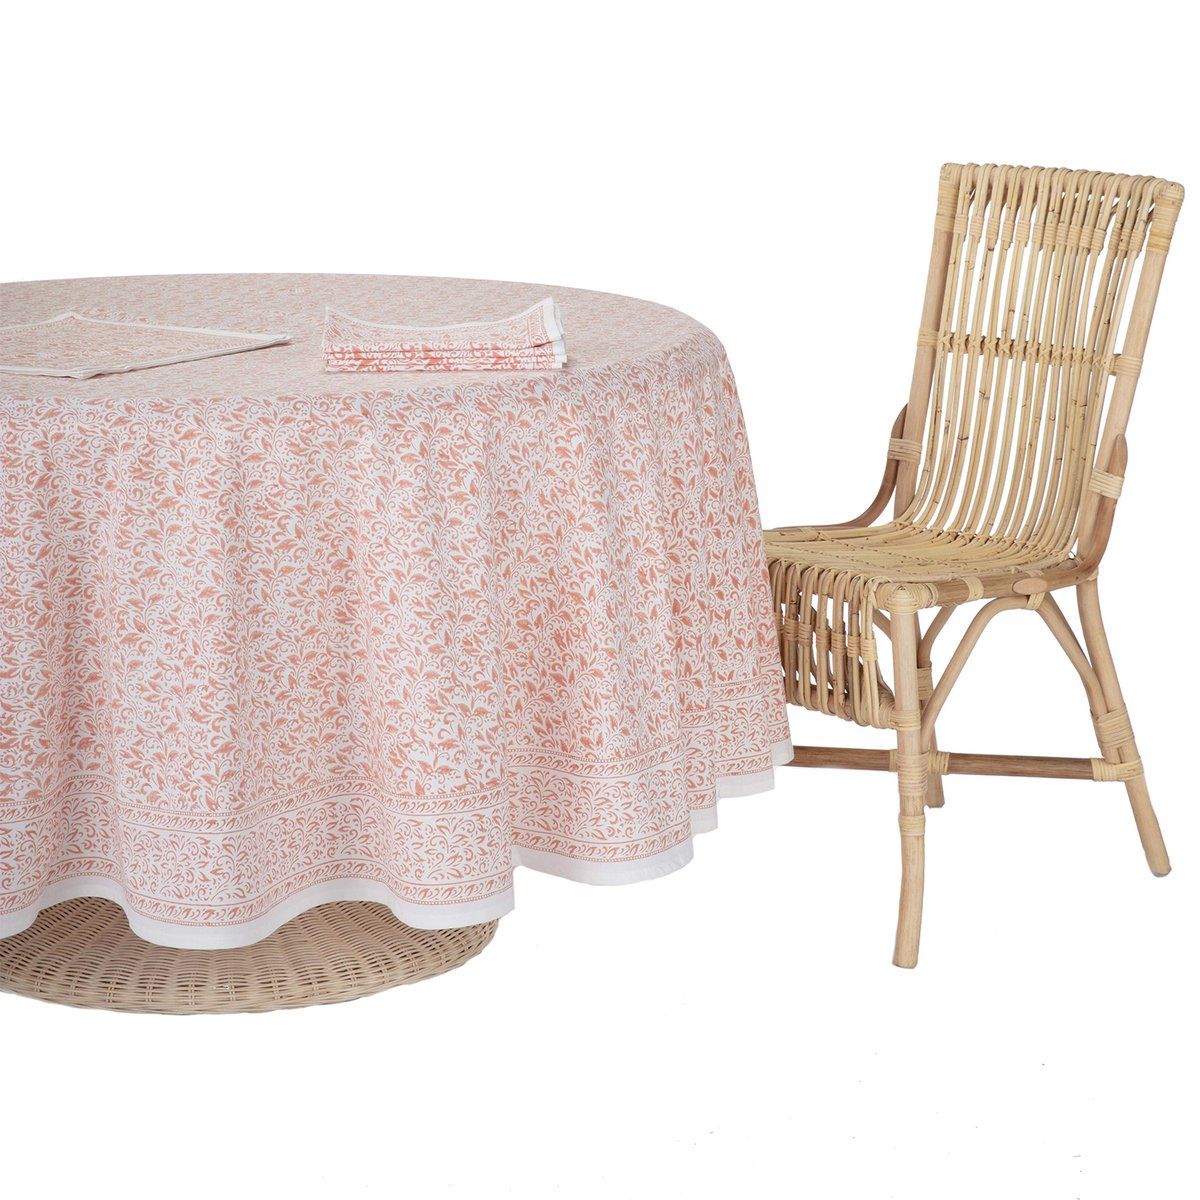 Nira Round Tablecloth Coral